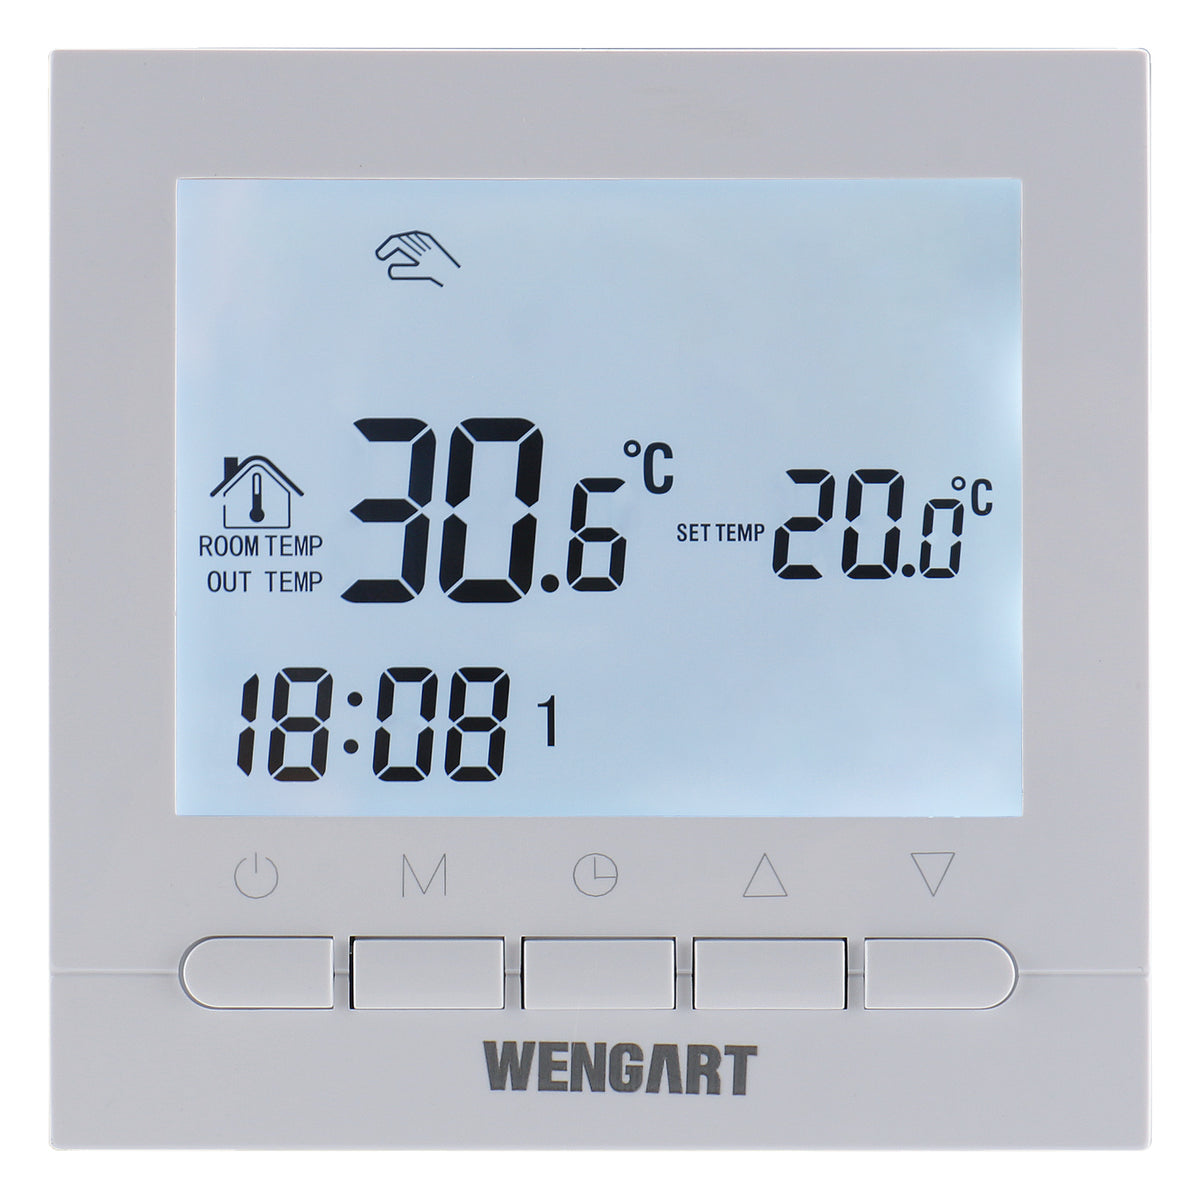 New Original Gas gas oven thermostat instrument digital display